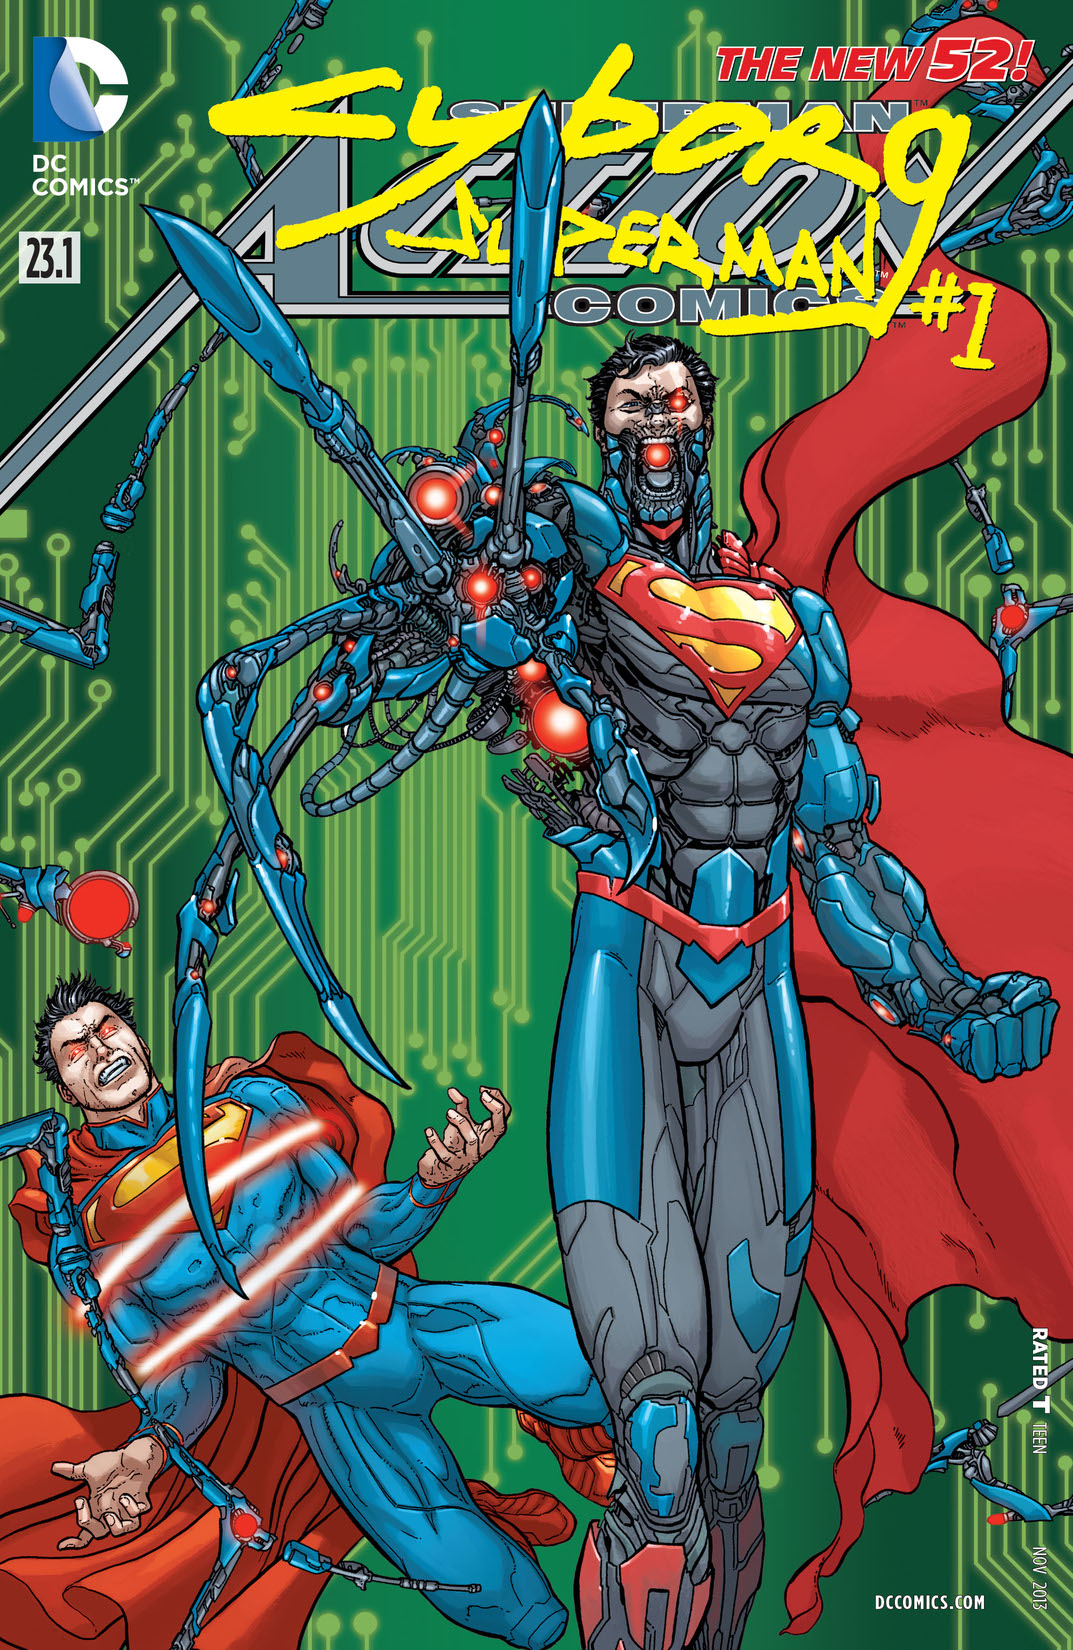 Action Comics feat Cyborg Superman (2013-) #23.1 preview images